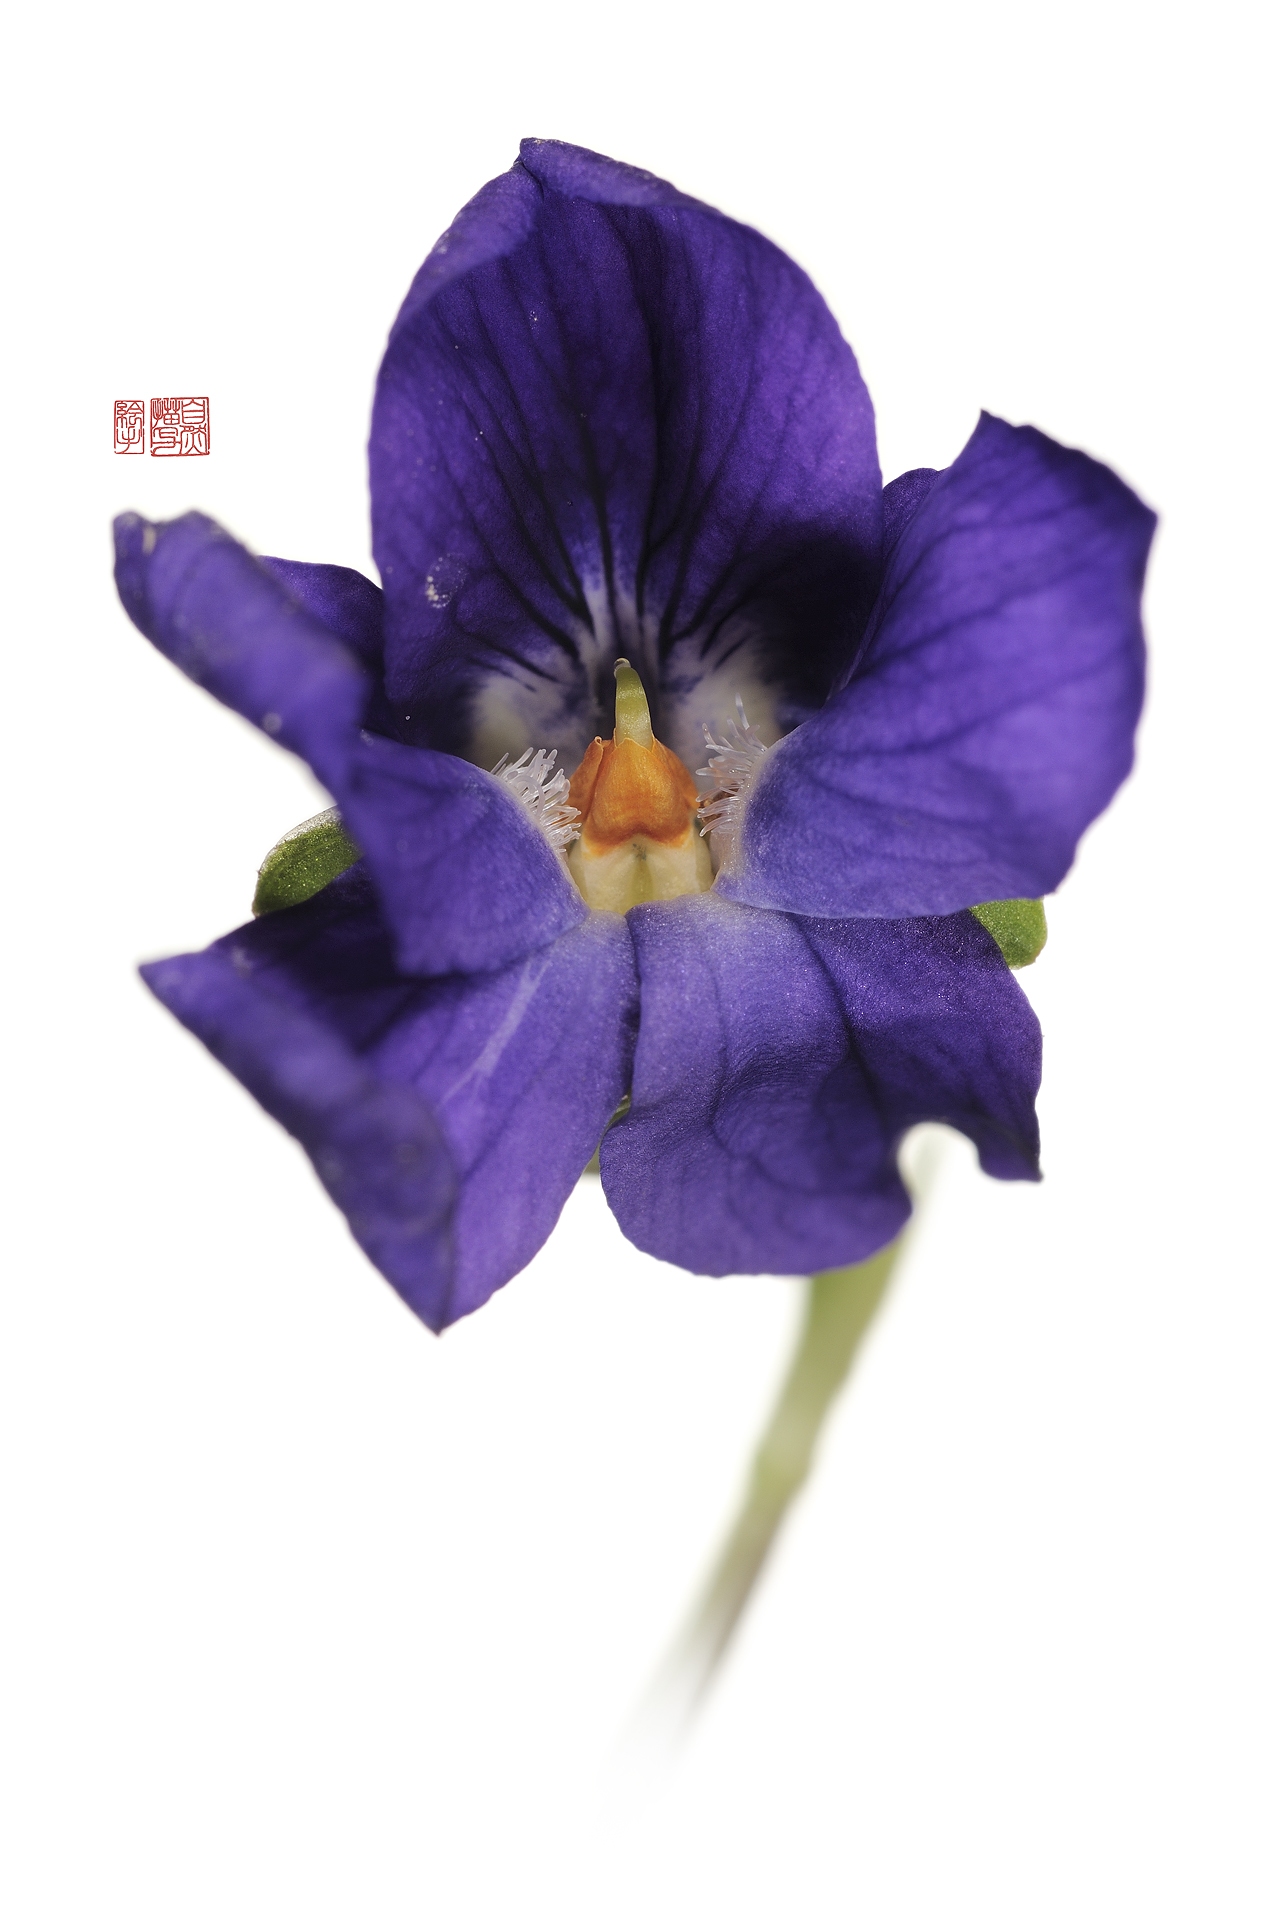 les fleurs amoureuses - Viola odorata 2 - Stéphane Hette Nikon